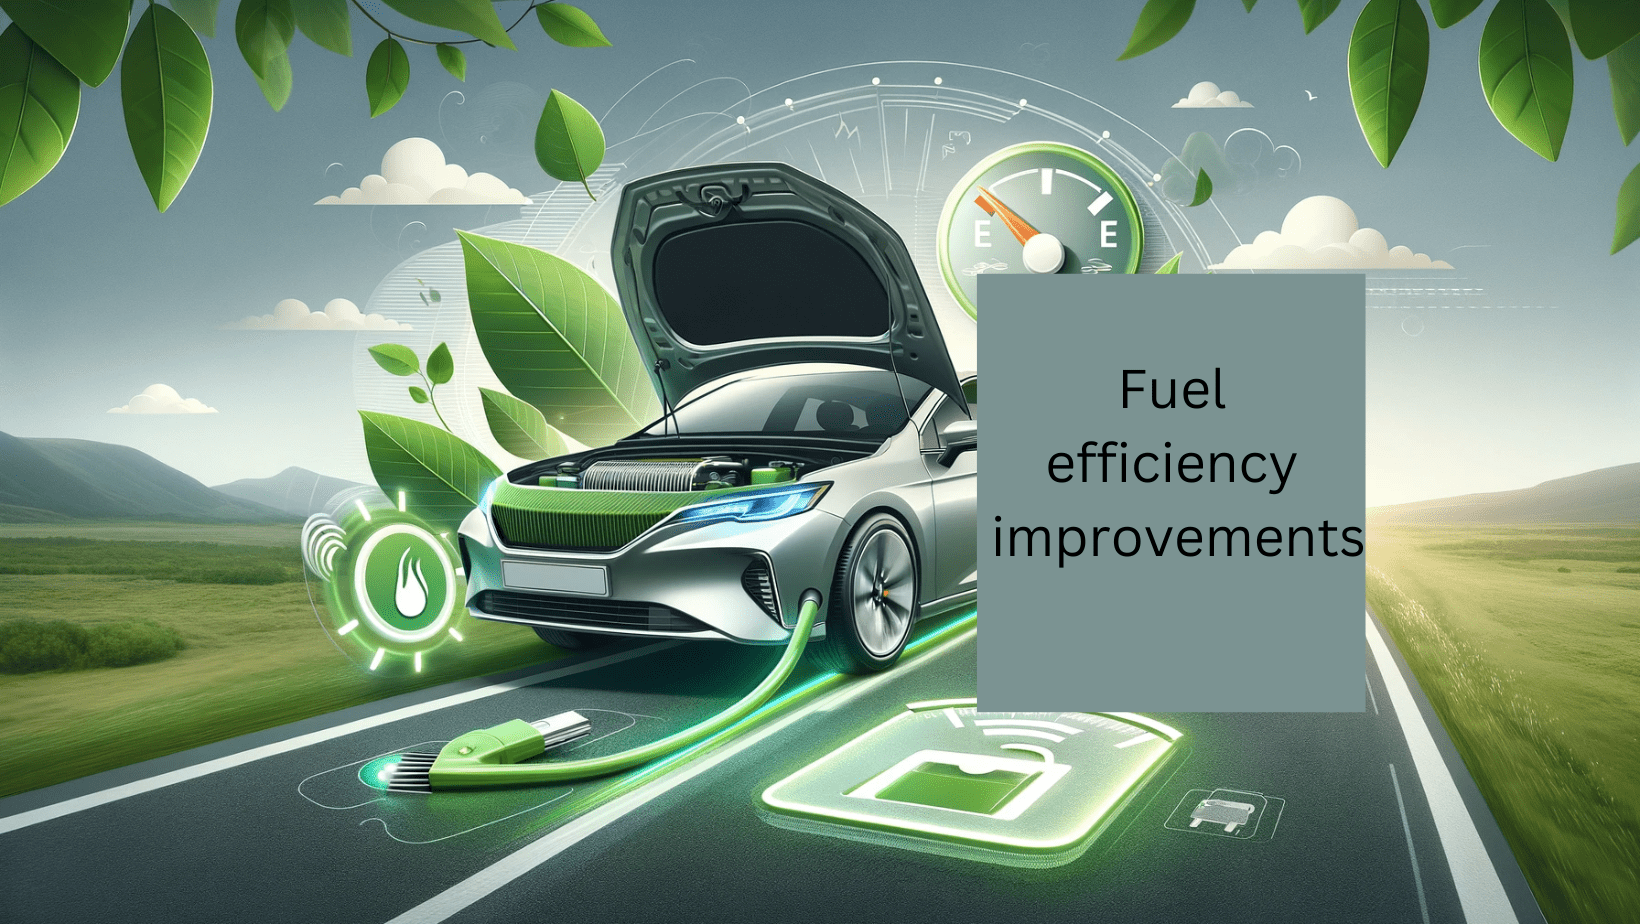 Fuel efficiency improvements